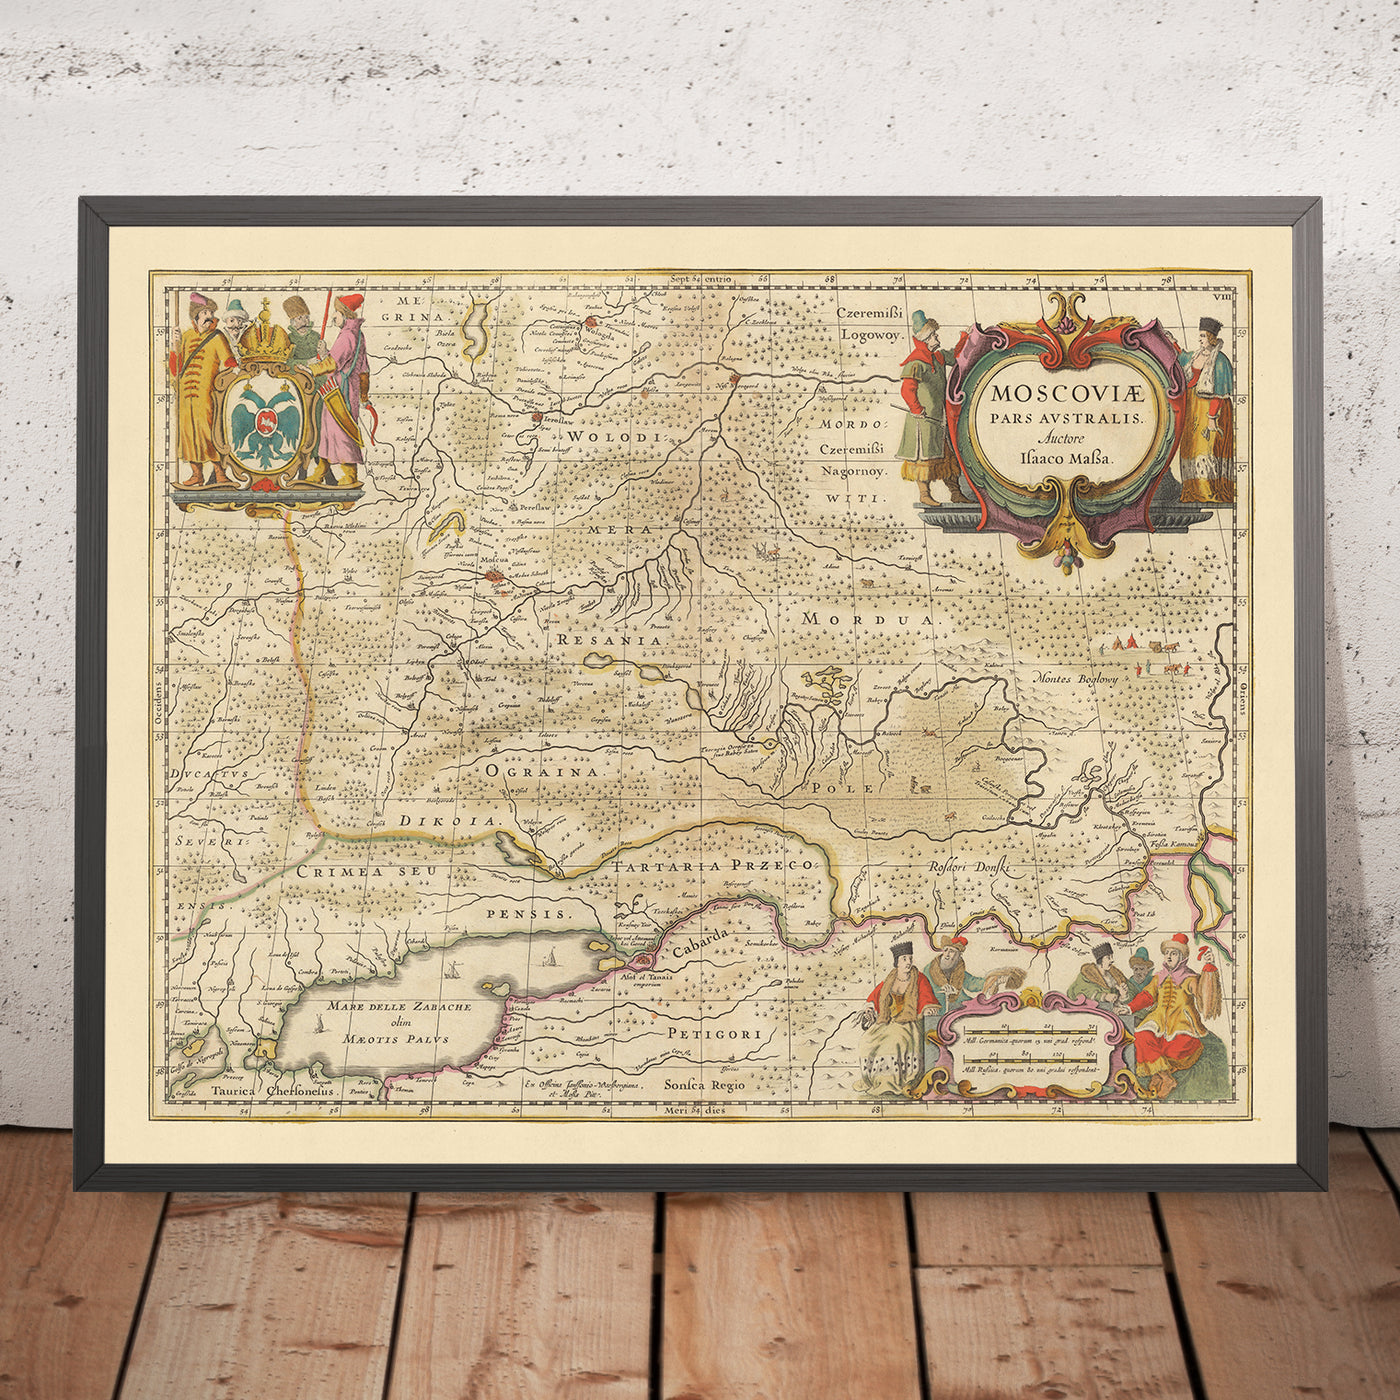 Ancienne carte du sud de la Russie par Visscher, 1690 : Moscou, Iaroslavl, Vologda, Nijni Novgorod, Rostov-sur-le-Don